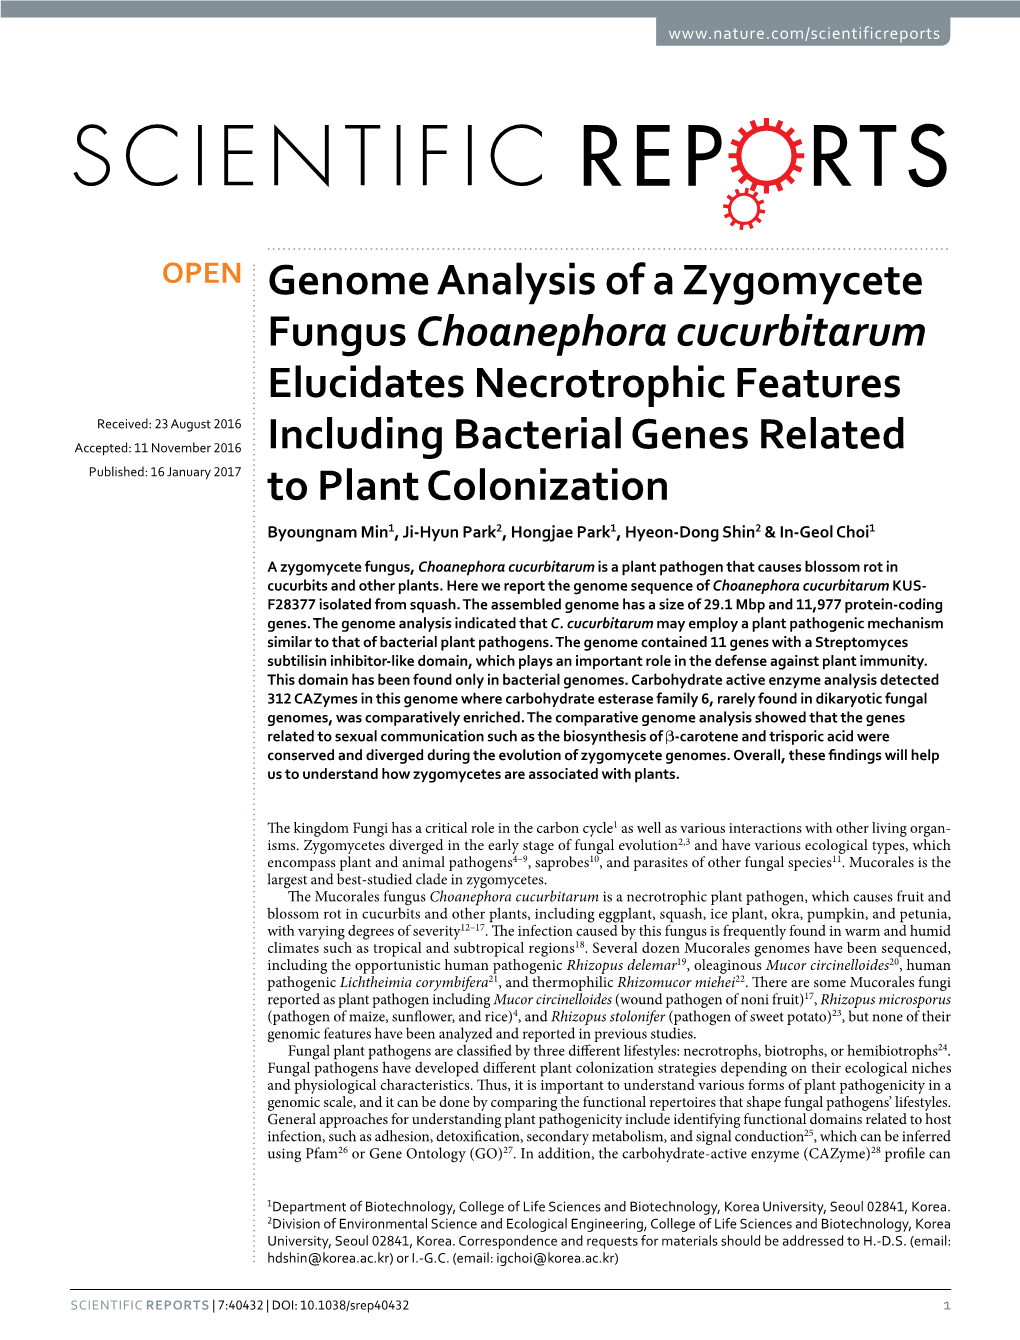 Genome Analysis of a Zygomycete Fungus Choanephora Cucurbitarum